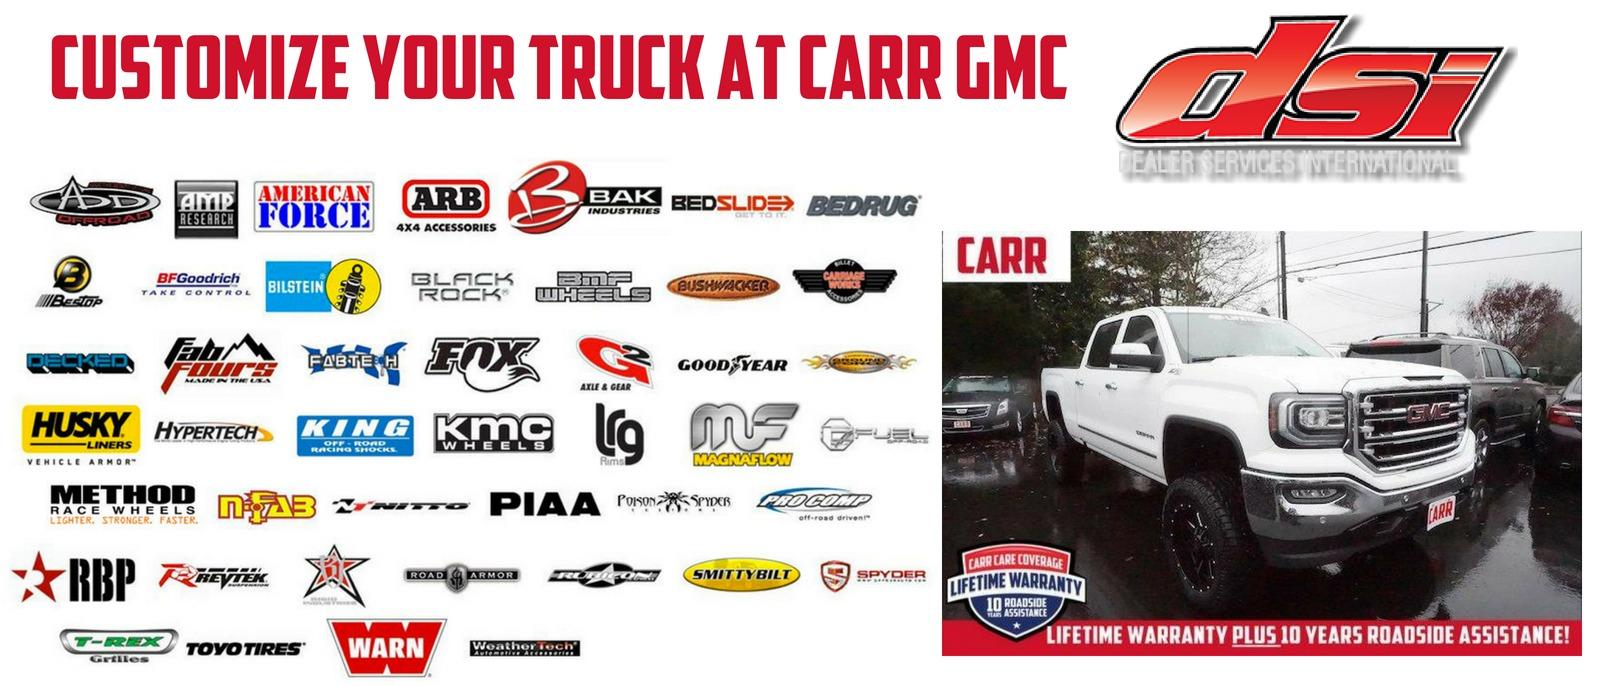 CARR GMC Vancouver Trucks l Lifted Trucks Vancouver WA